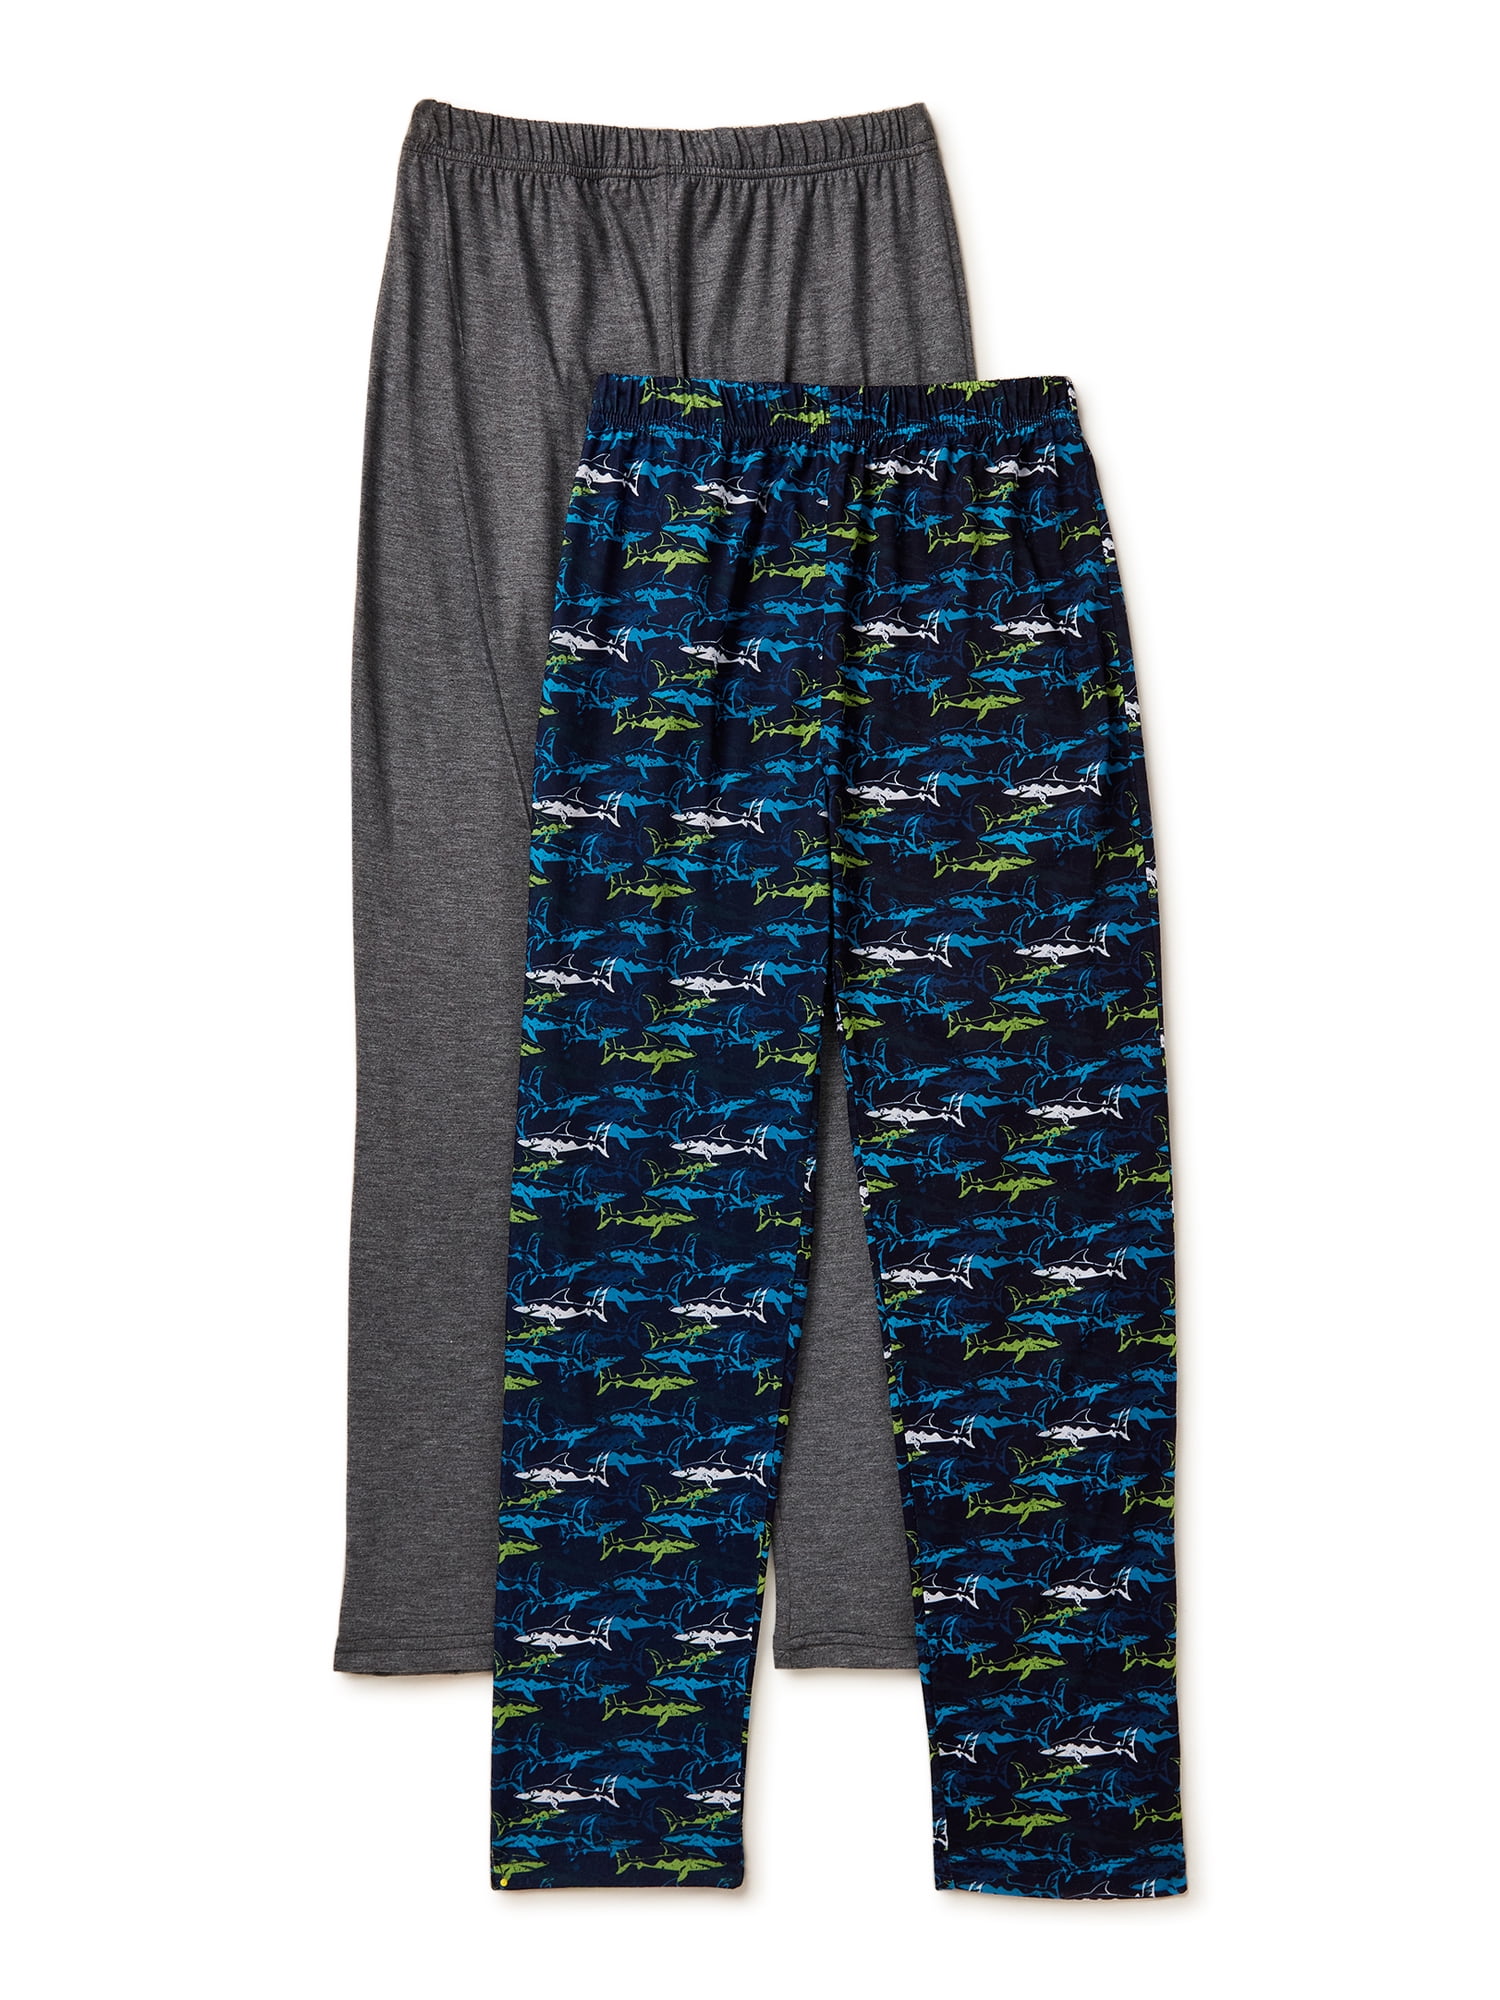 Championship Gold Boys Solid and Print Pajama Sleep Pants, 2-Pack, Sizes  4-14 